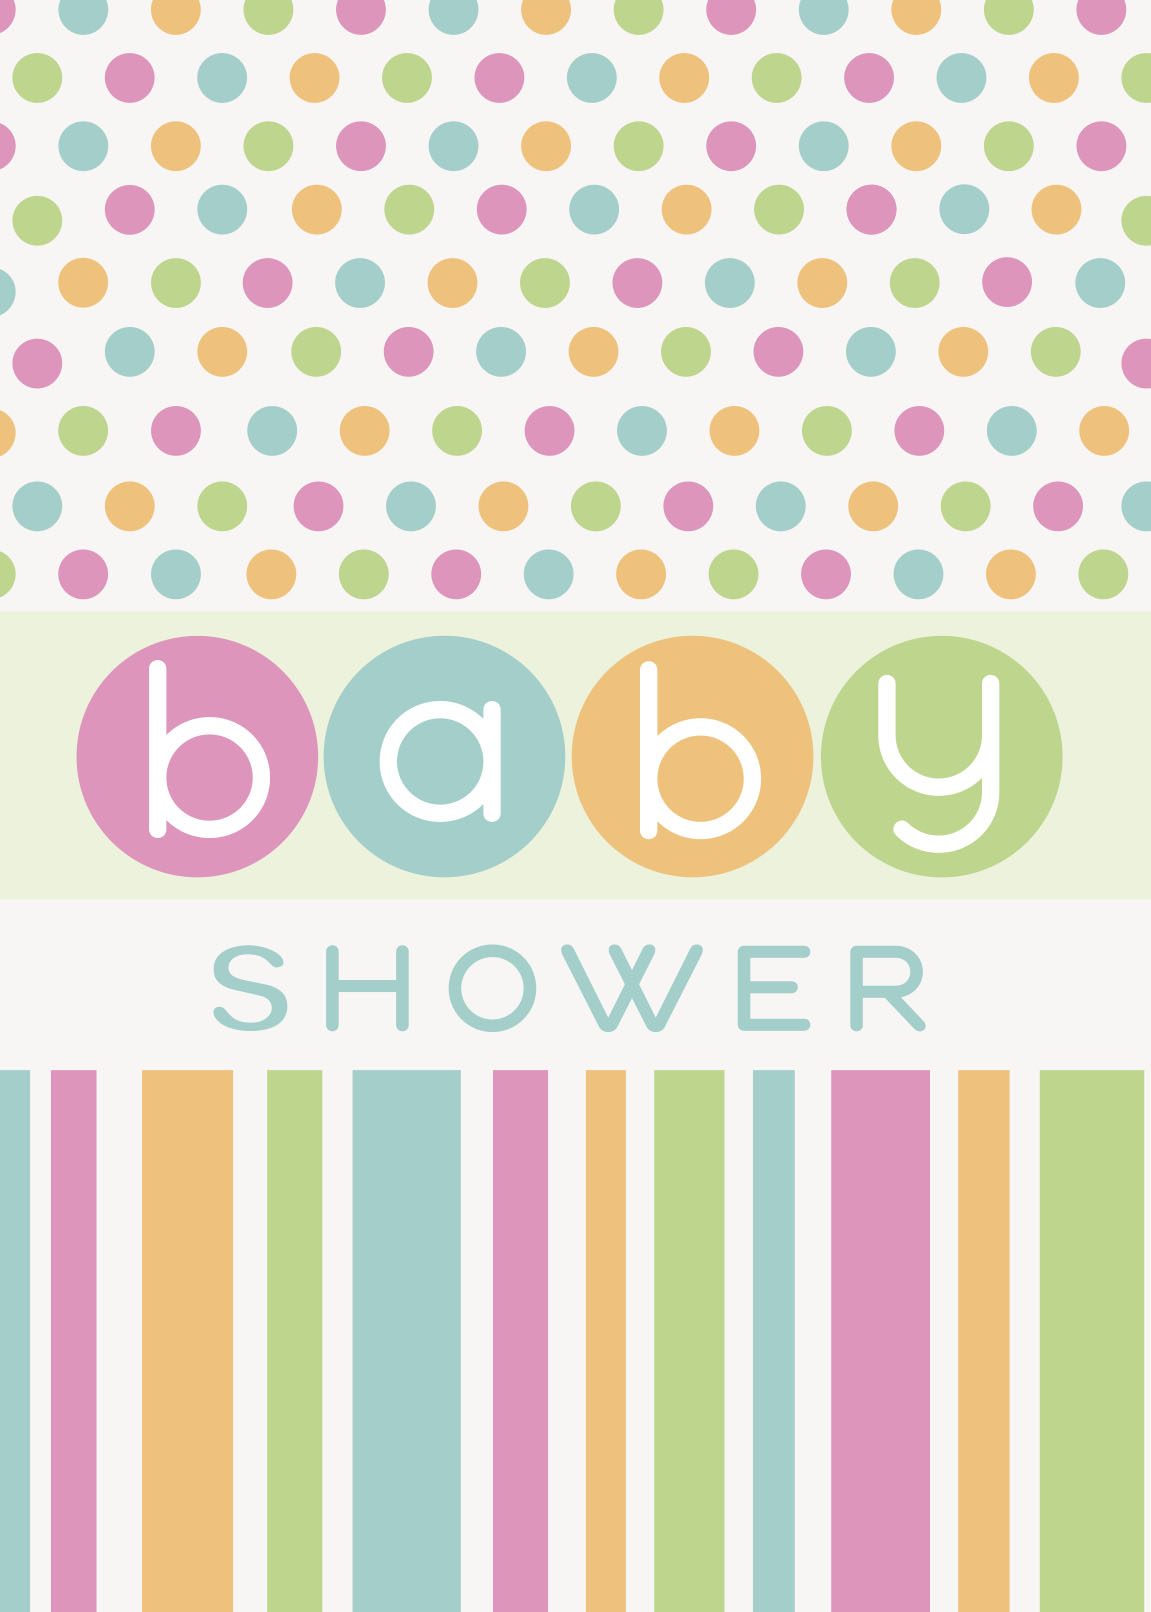 Pastel Baby Shower Invitations (8pk)